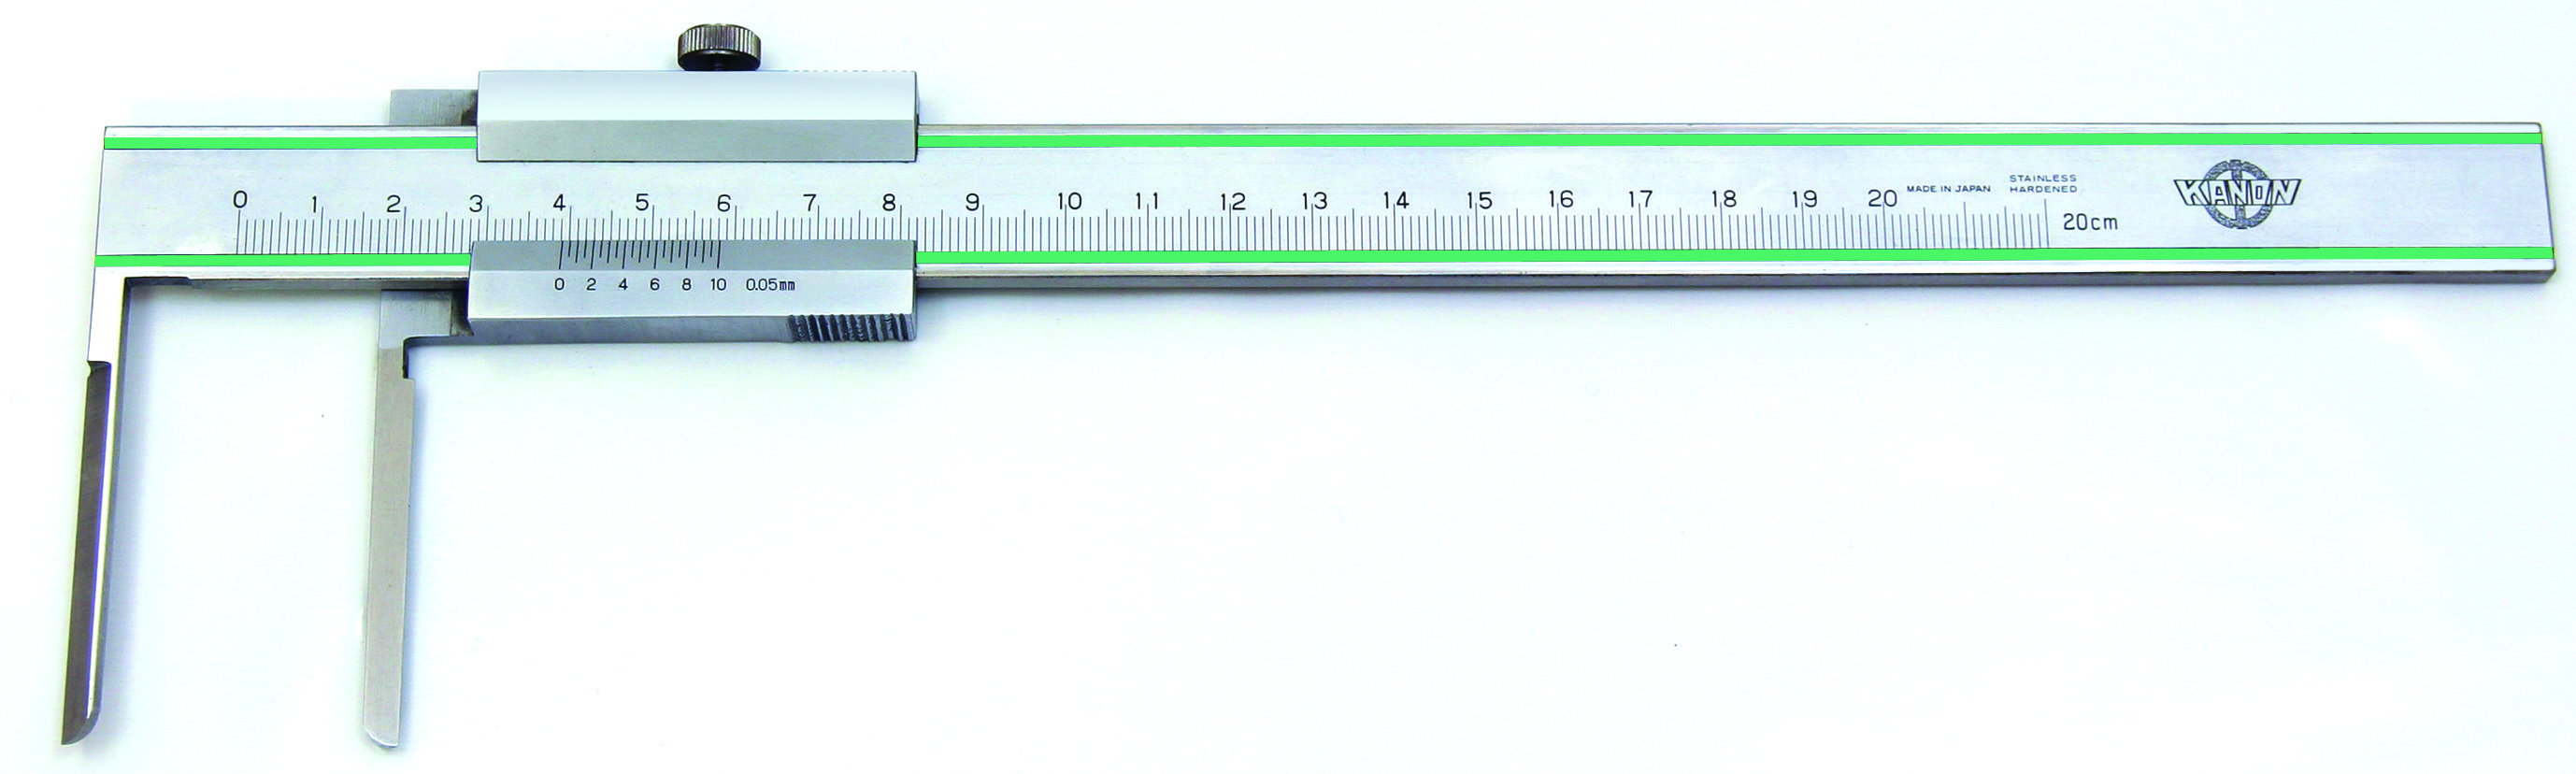 Vernier Caliper - Internal Measurement, Long Jaw Type, ICM